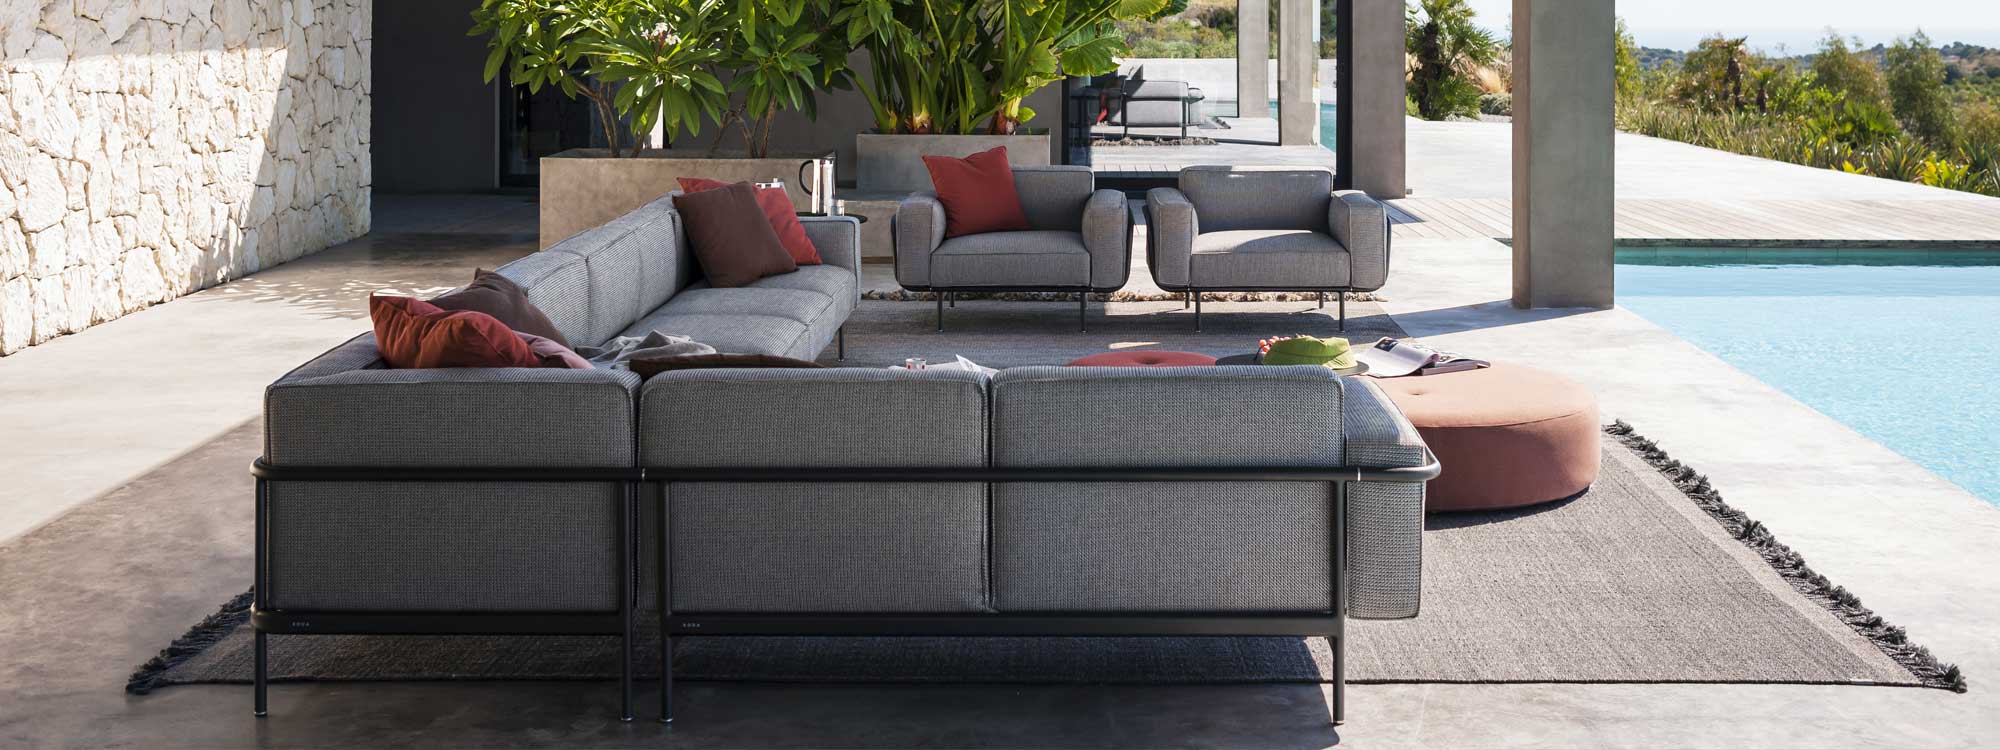 Image from rear of RODA Estendo modern garden corner sofa, showing the furniture's elegant tubular black aluminium frame